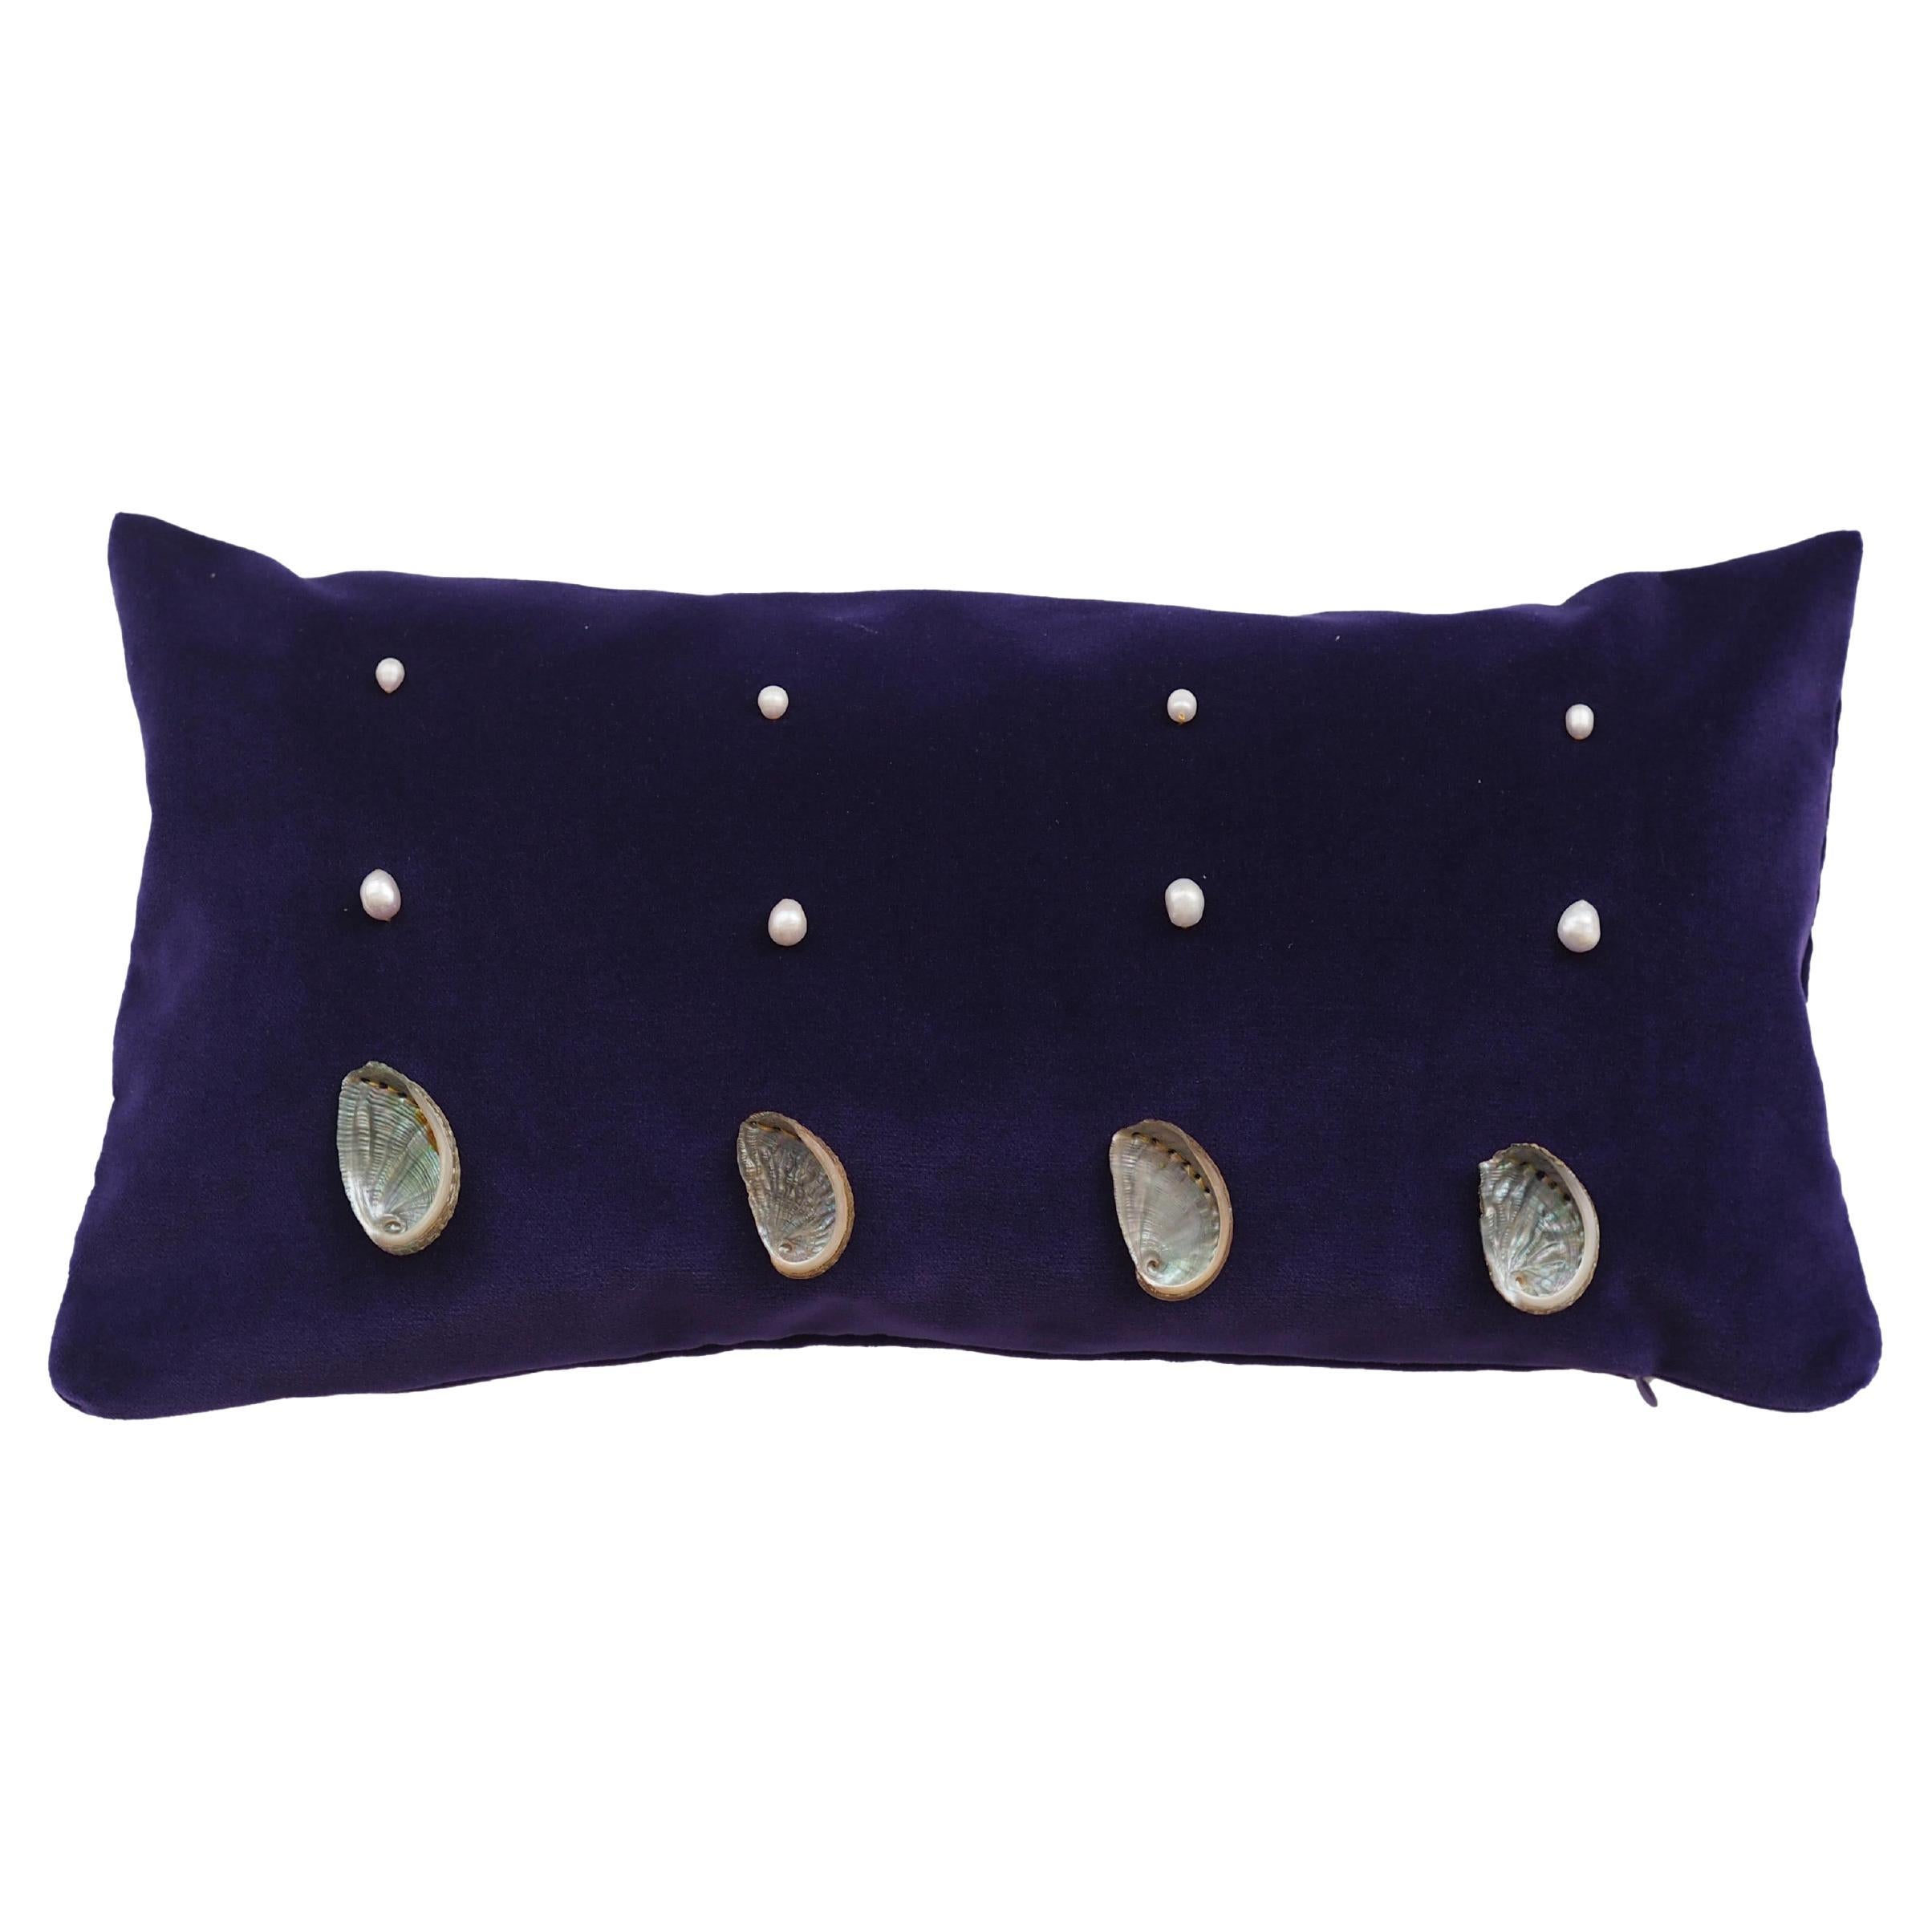 Bon Appetit 010 Decorative Cushion Culto Ponsoda 21st century desingn For Sale